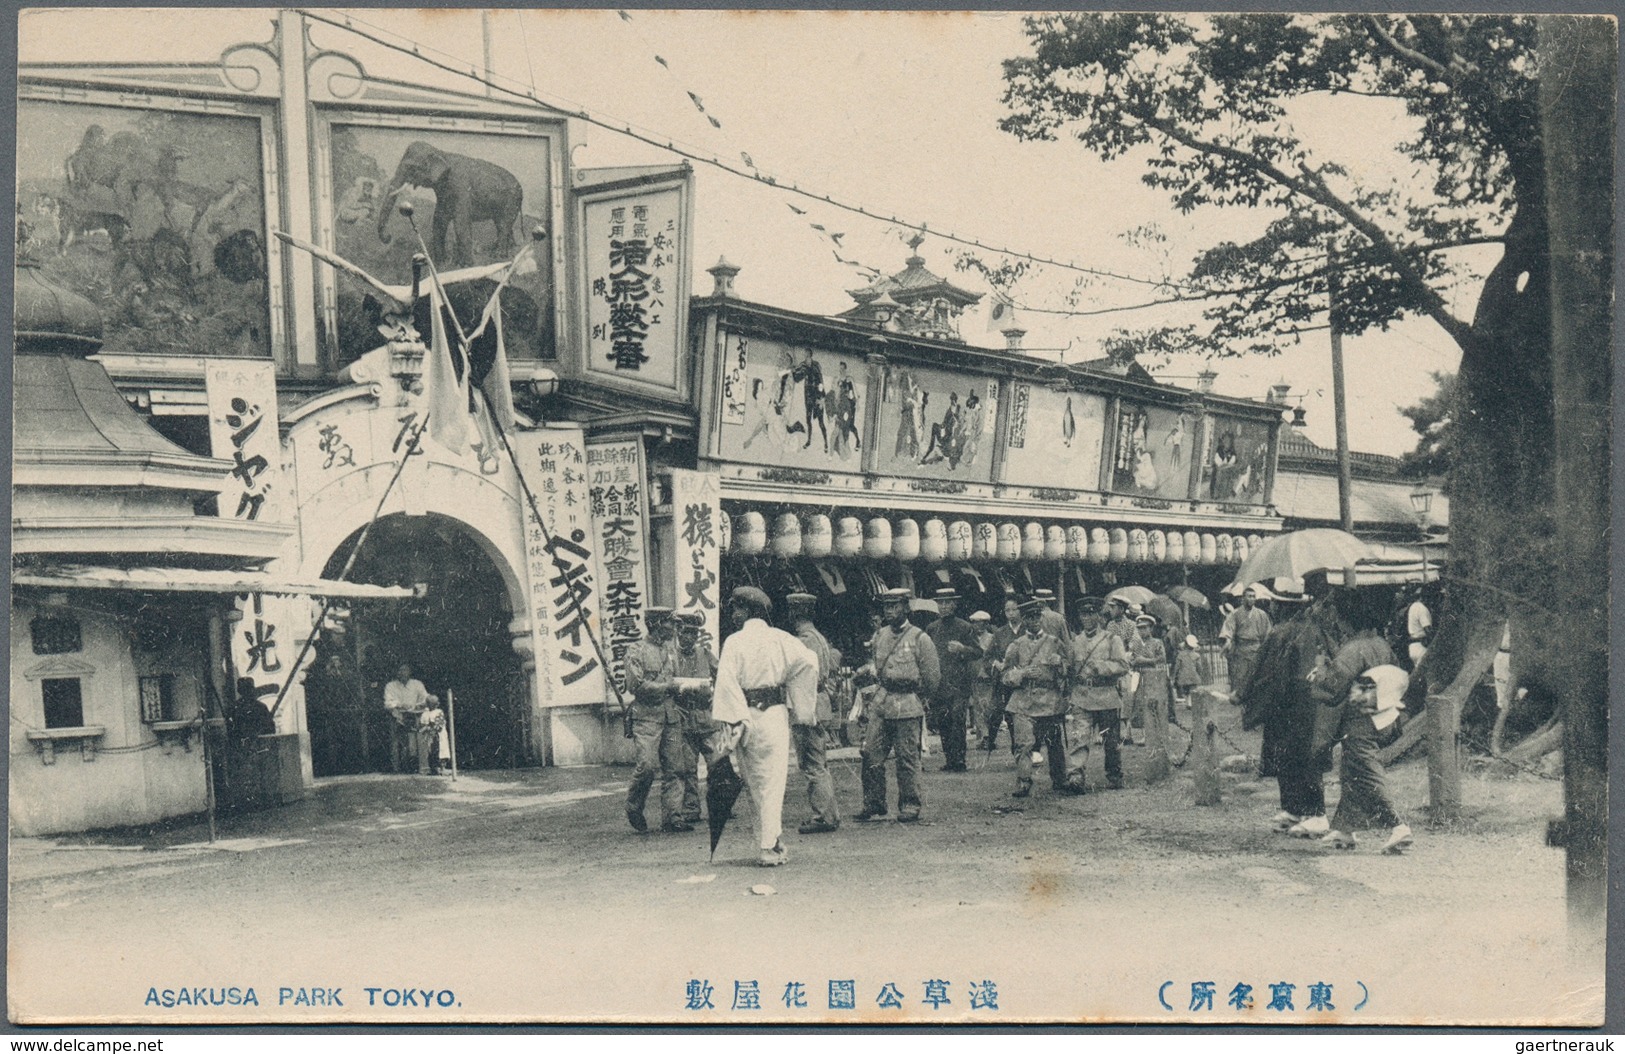 29483 Japan - Besonderheiten: 1900/37 (ca.), 108 mint ppc (just a handful saw postal duty) showing views o